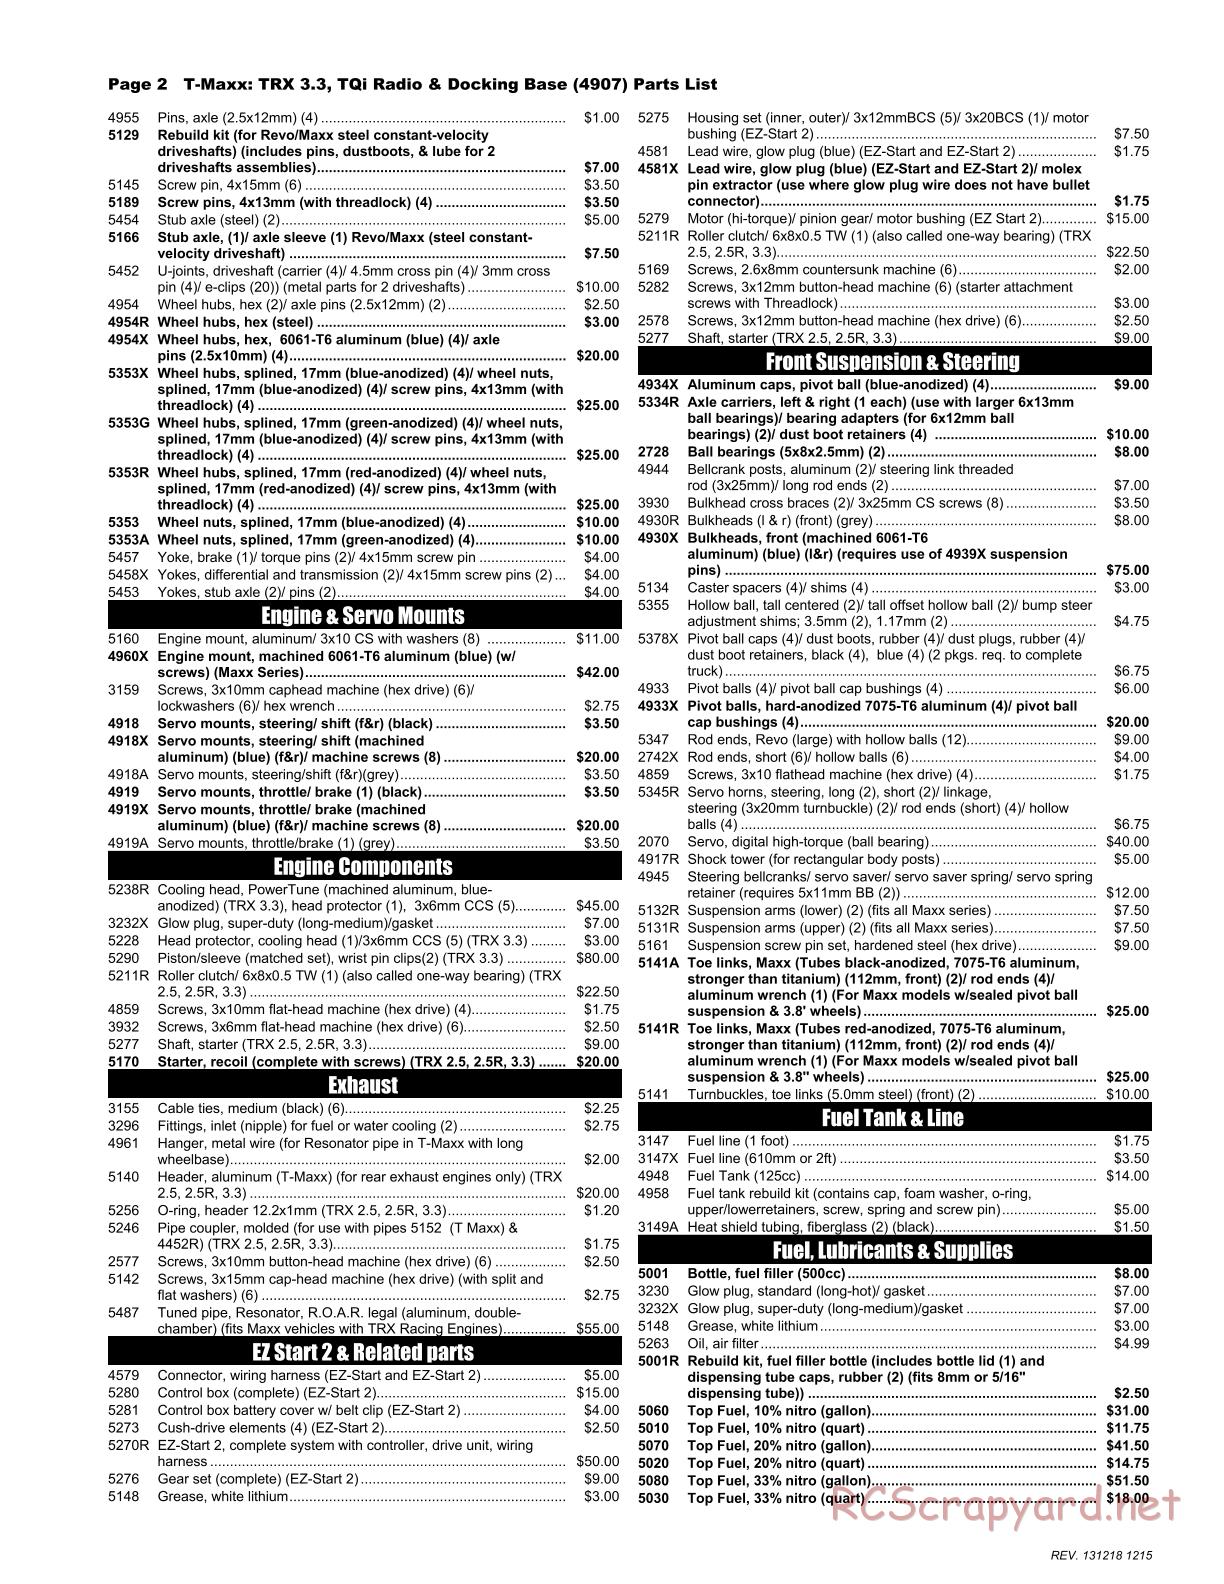 Traxxas - T-Maxx 3.3 (2010) - Parts List - Page 2